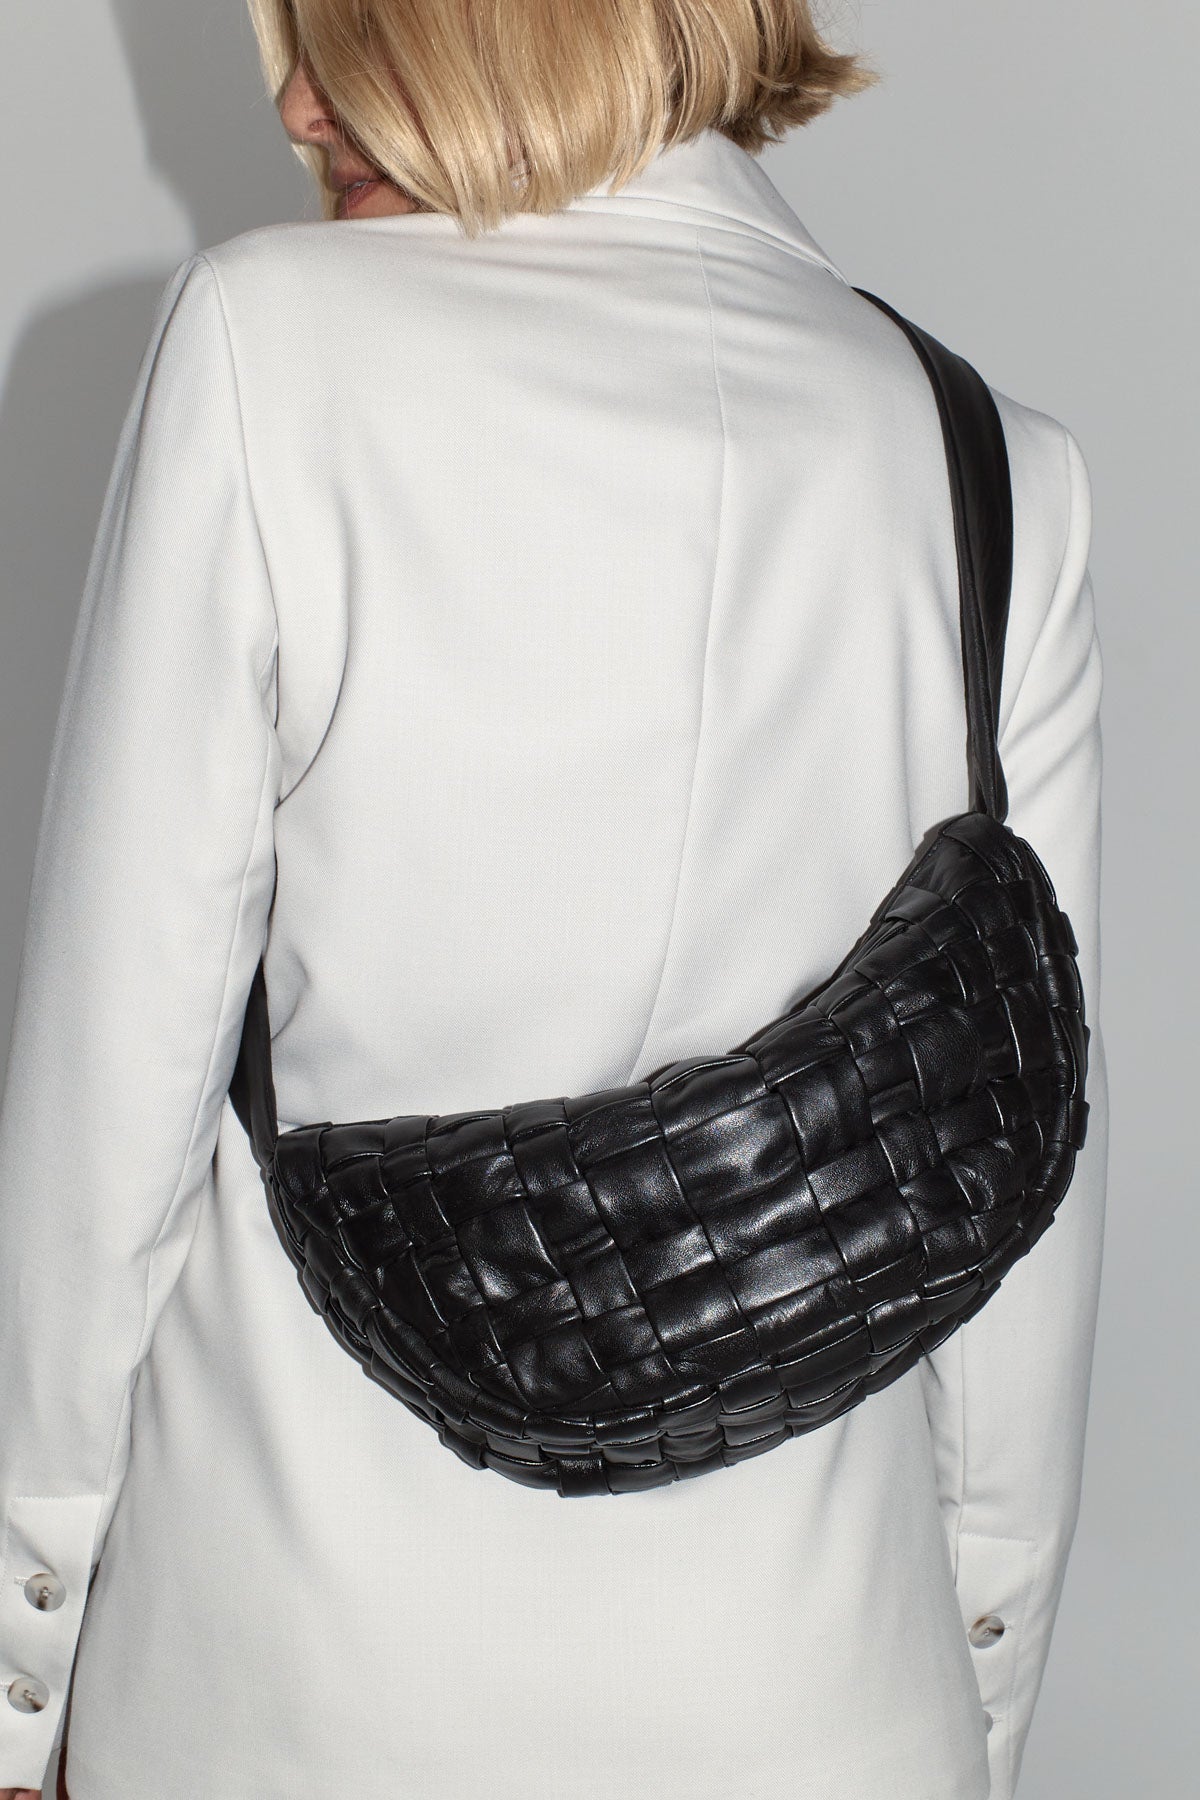 PRE-ORDER: Textured Crescent Bag - Black